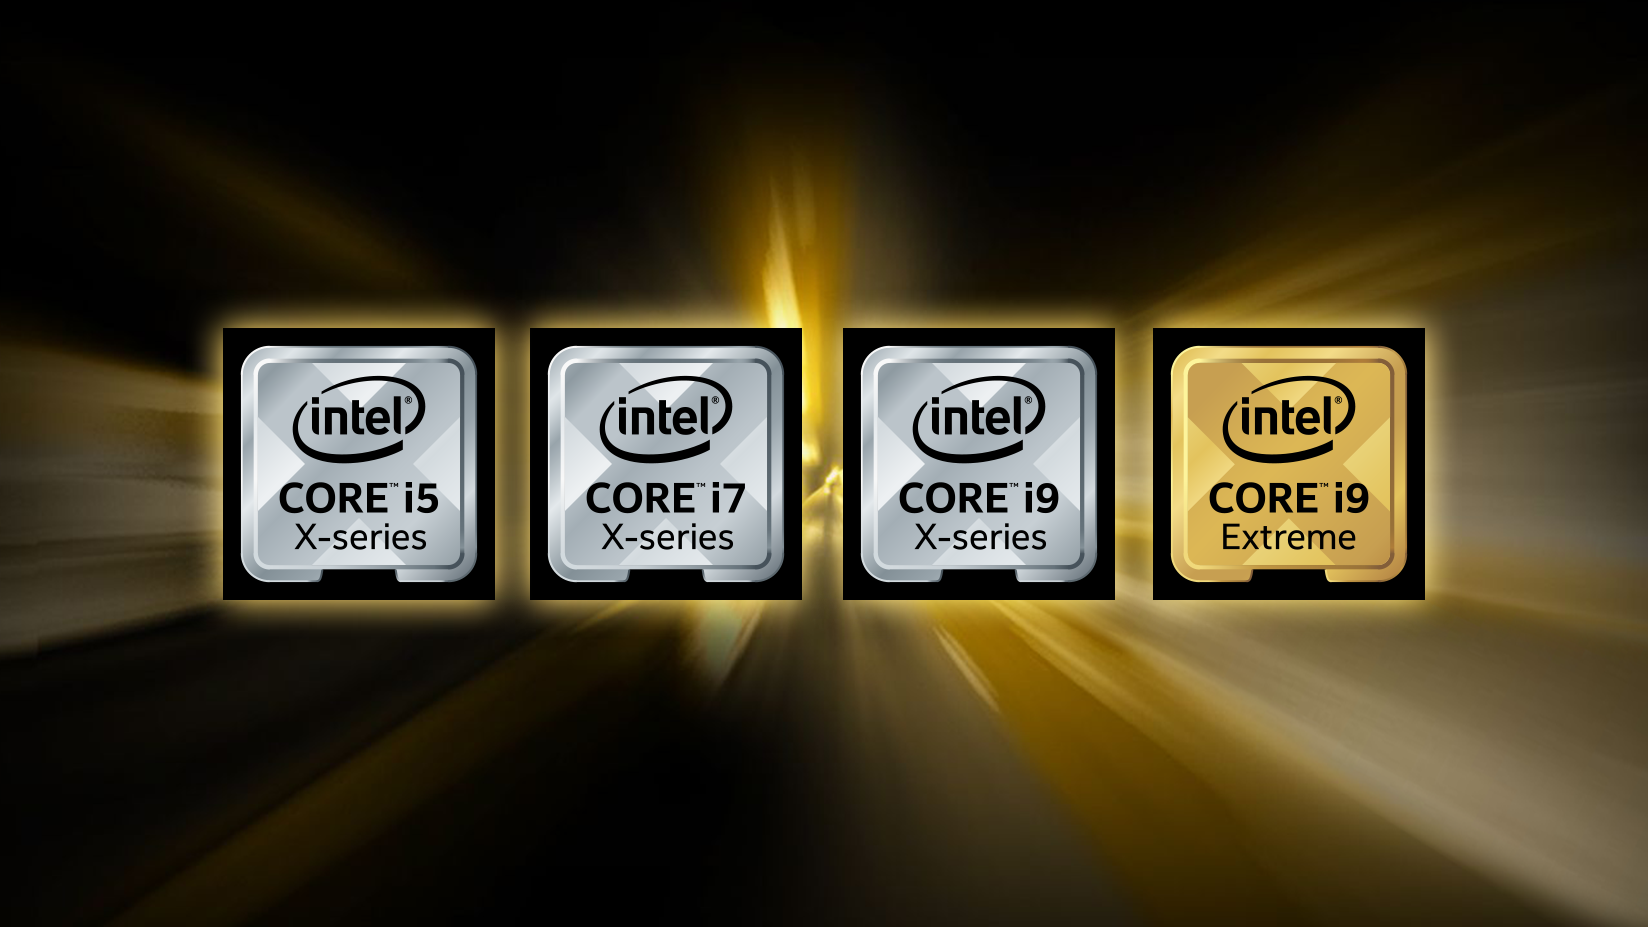 Intel Core i9-8950HK, i7-8850H, i7-8750H lộ điểm Cinebench